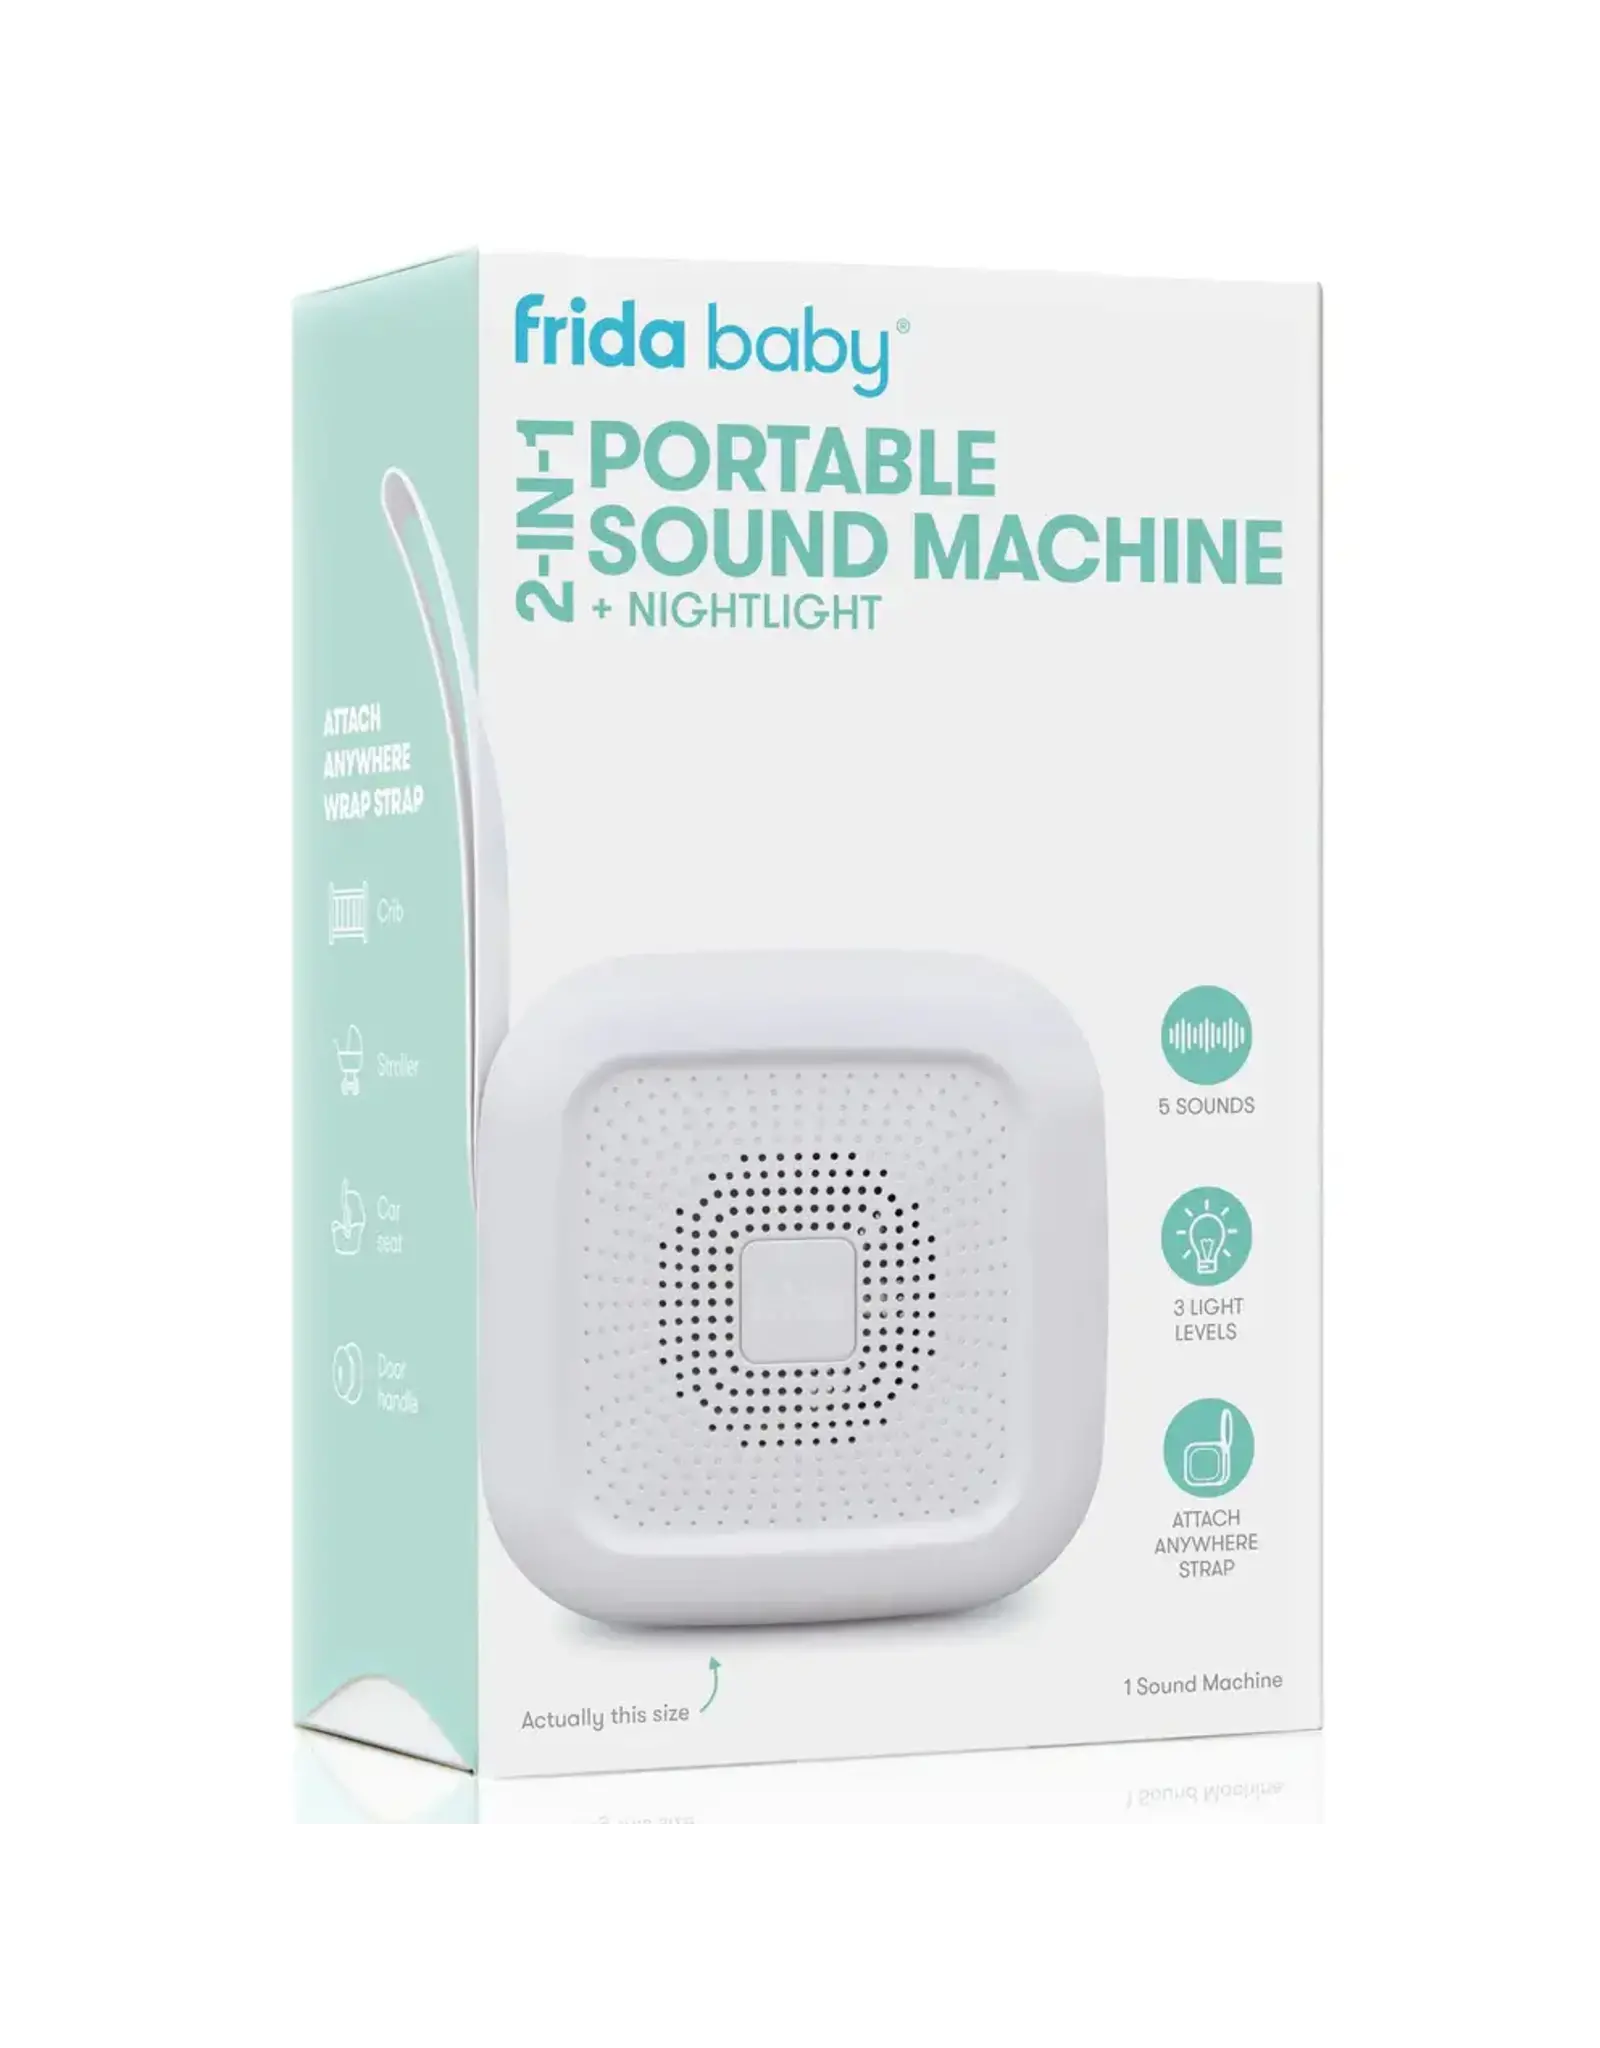 Frida Frida Baby 2 in 1 portable Sound Machine + Nightlight